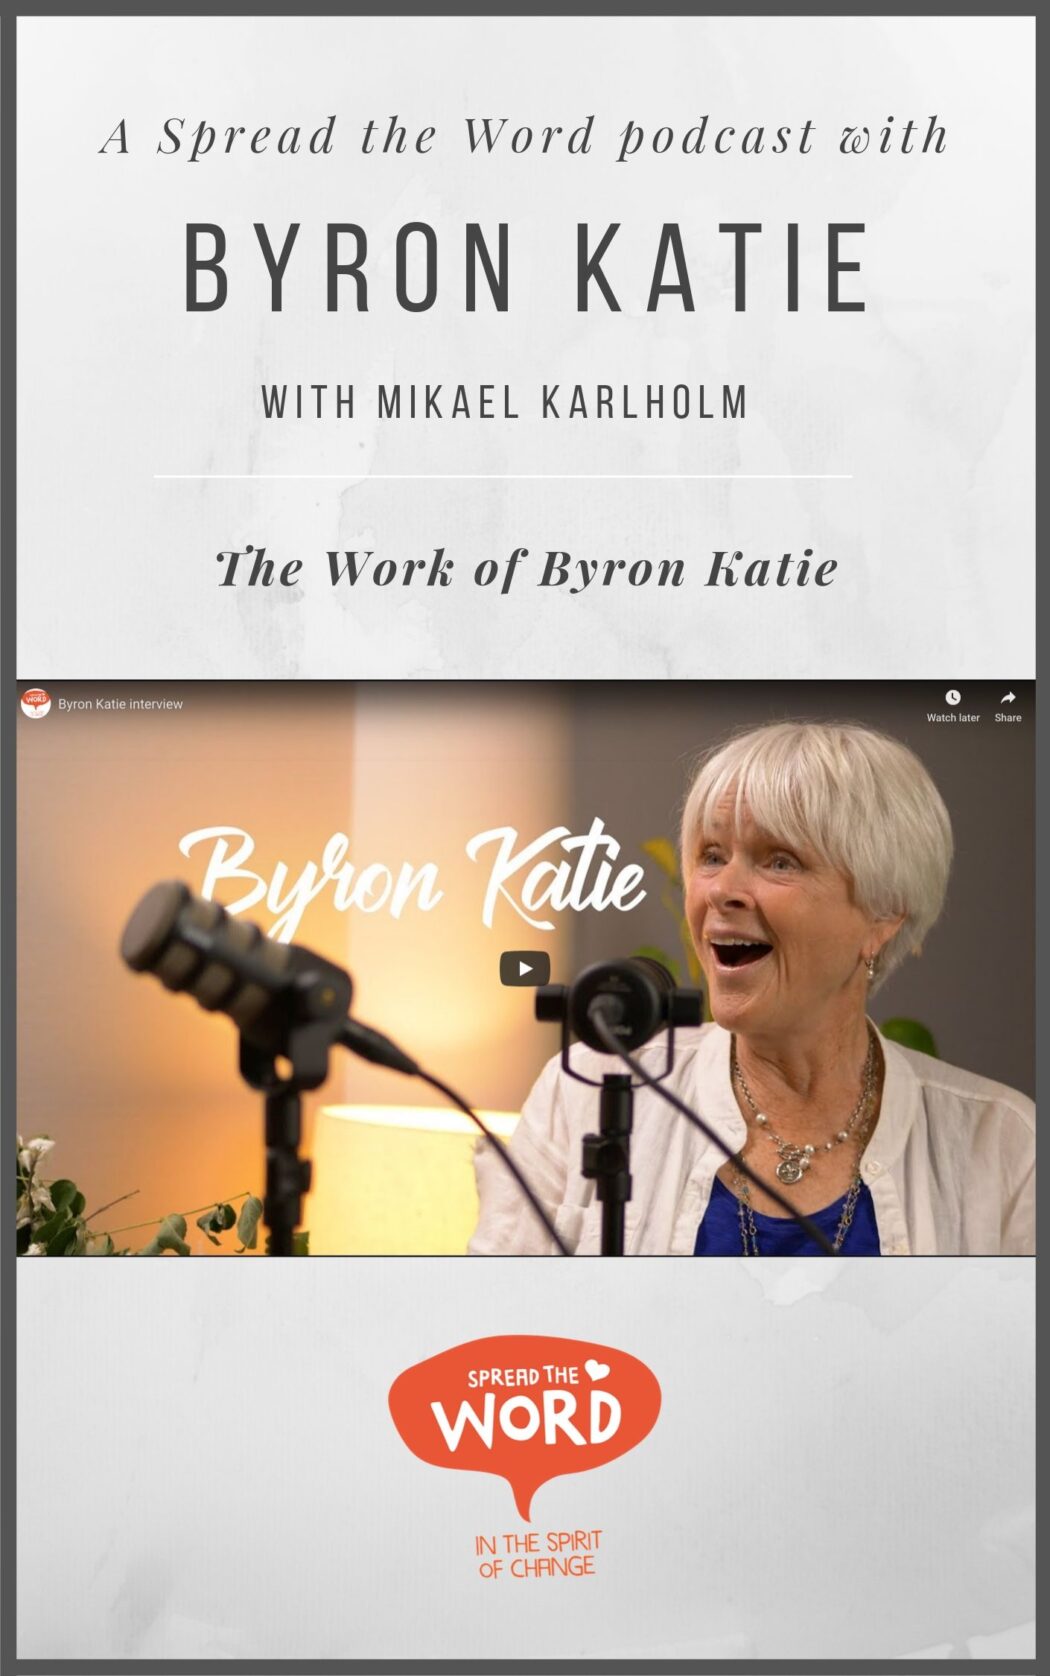 Podcast med Byron Katie och Mikael Karlholm, Spread the word